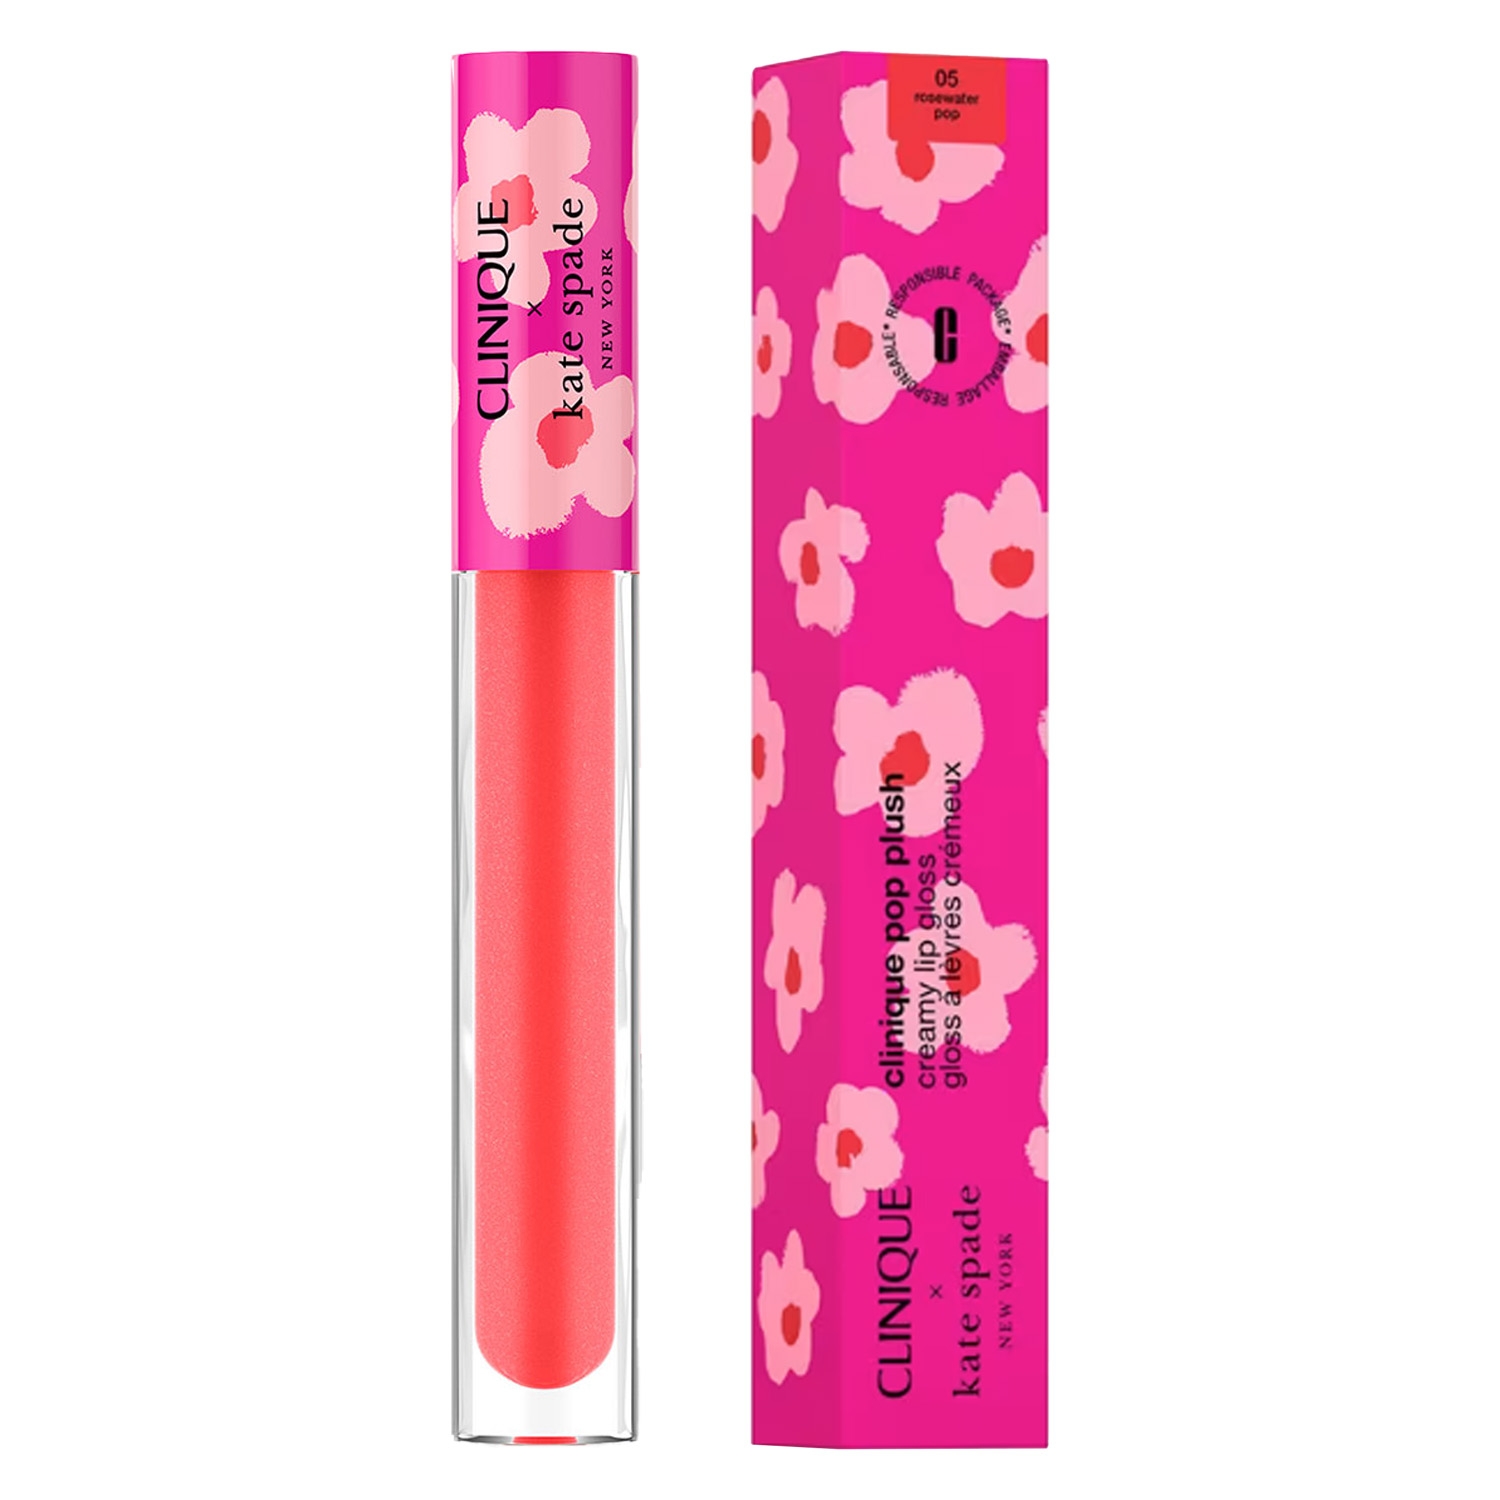 Produktbild von Clinique Lips - Decorated Kate Spade Pop Plush 05 Rosewater Pop